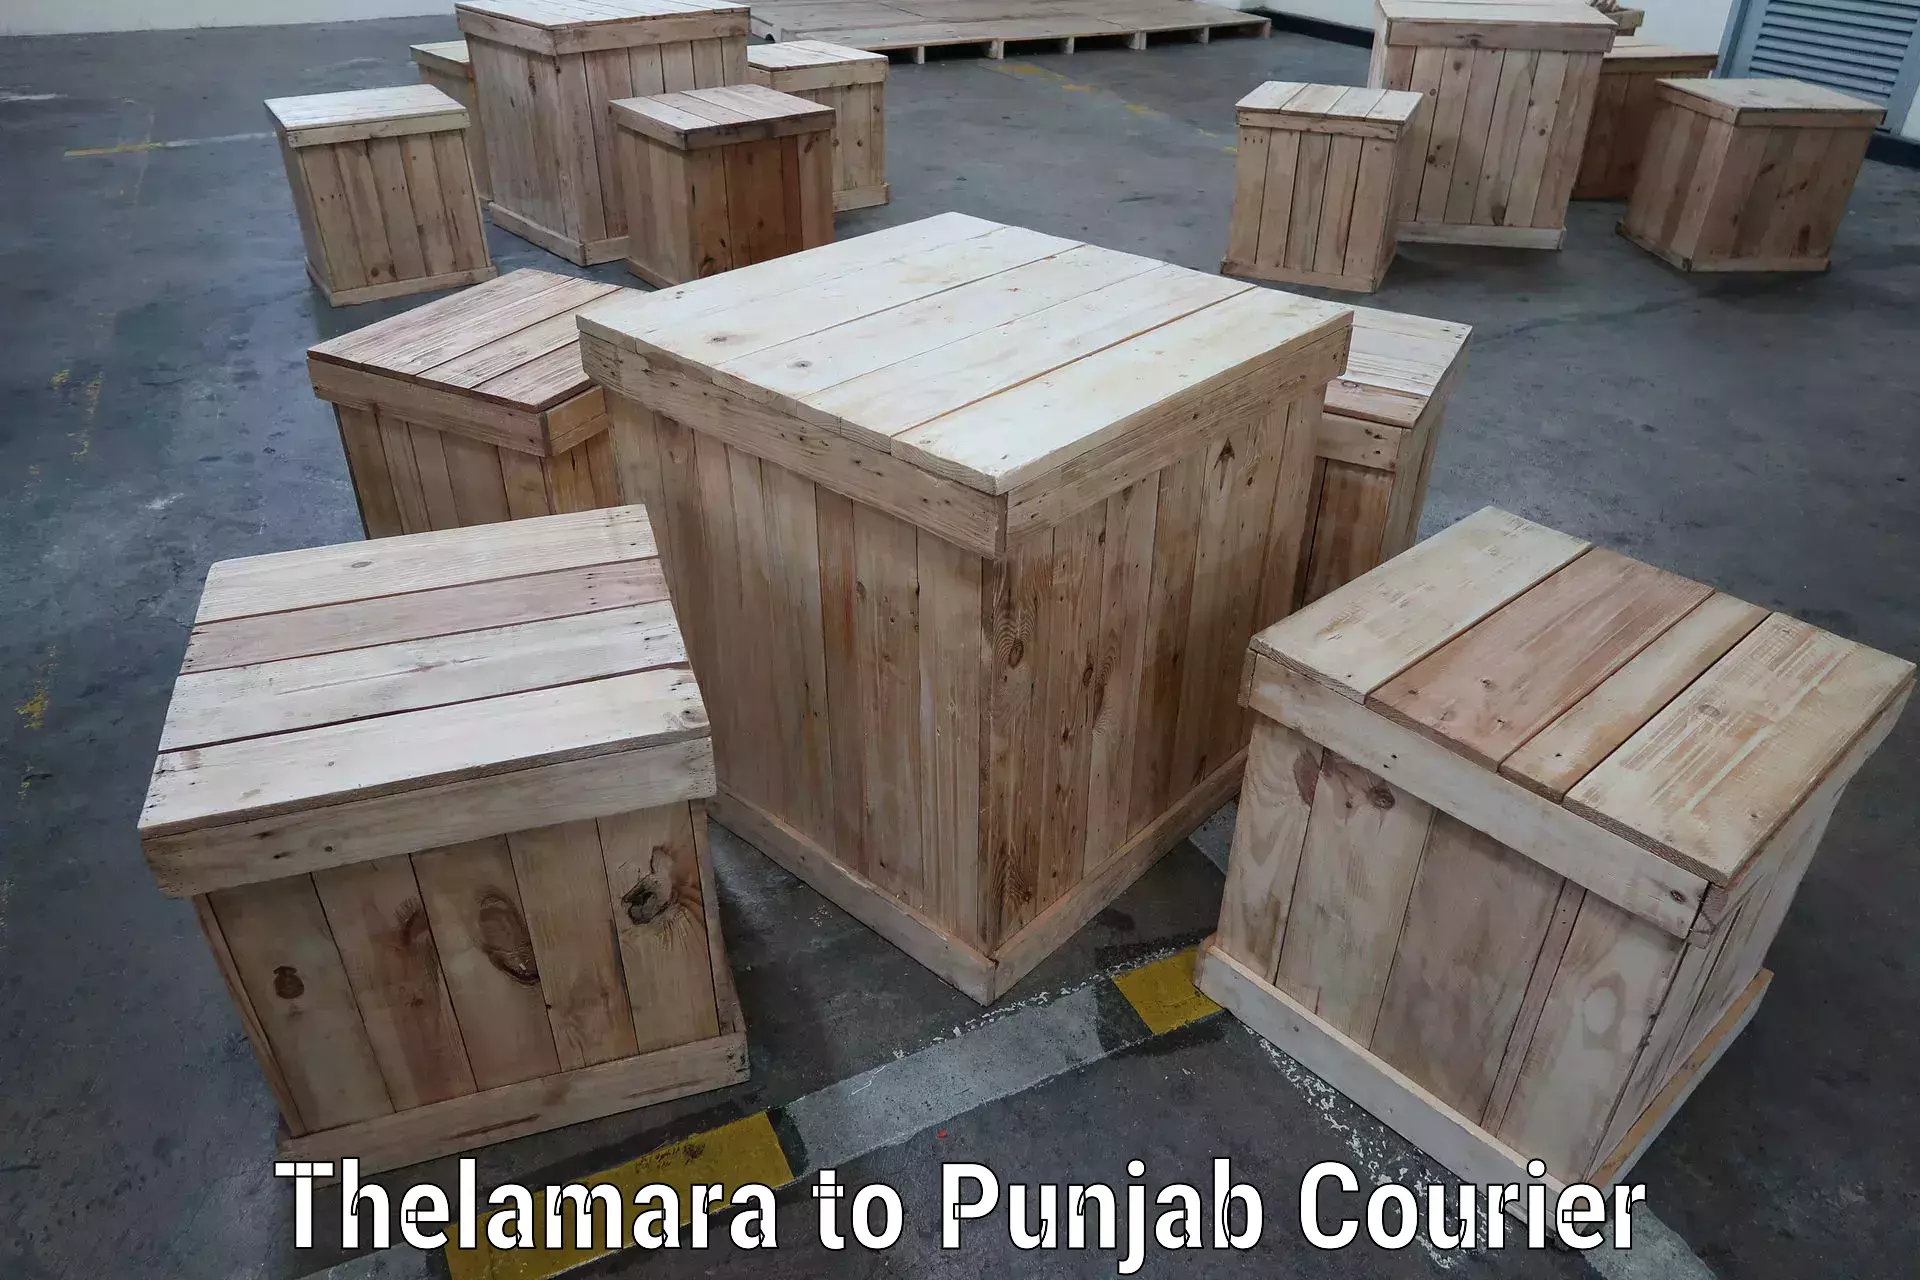 Ground shipping Thelamara to Amritsar